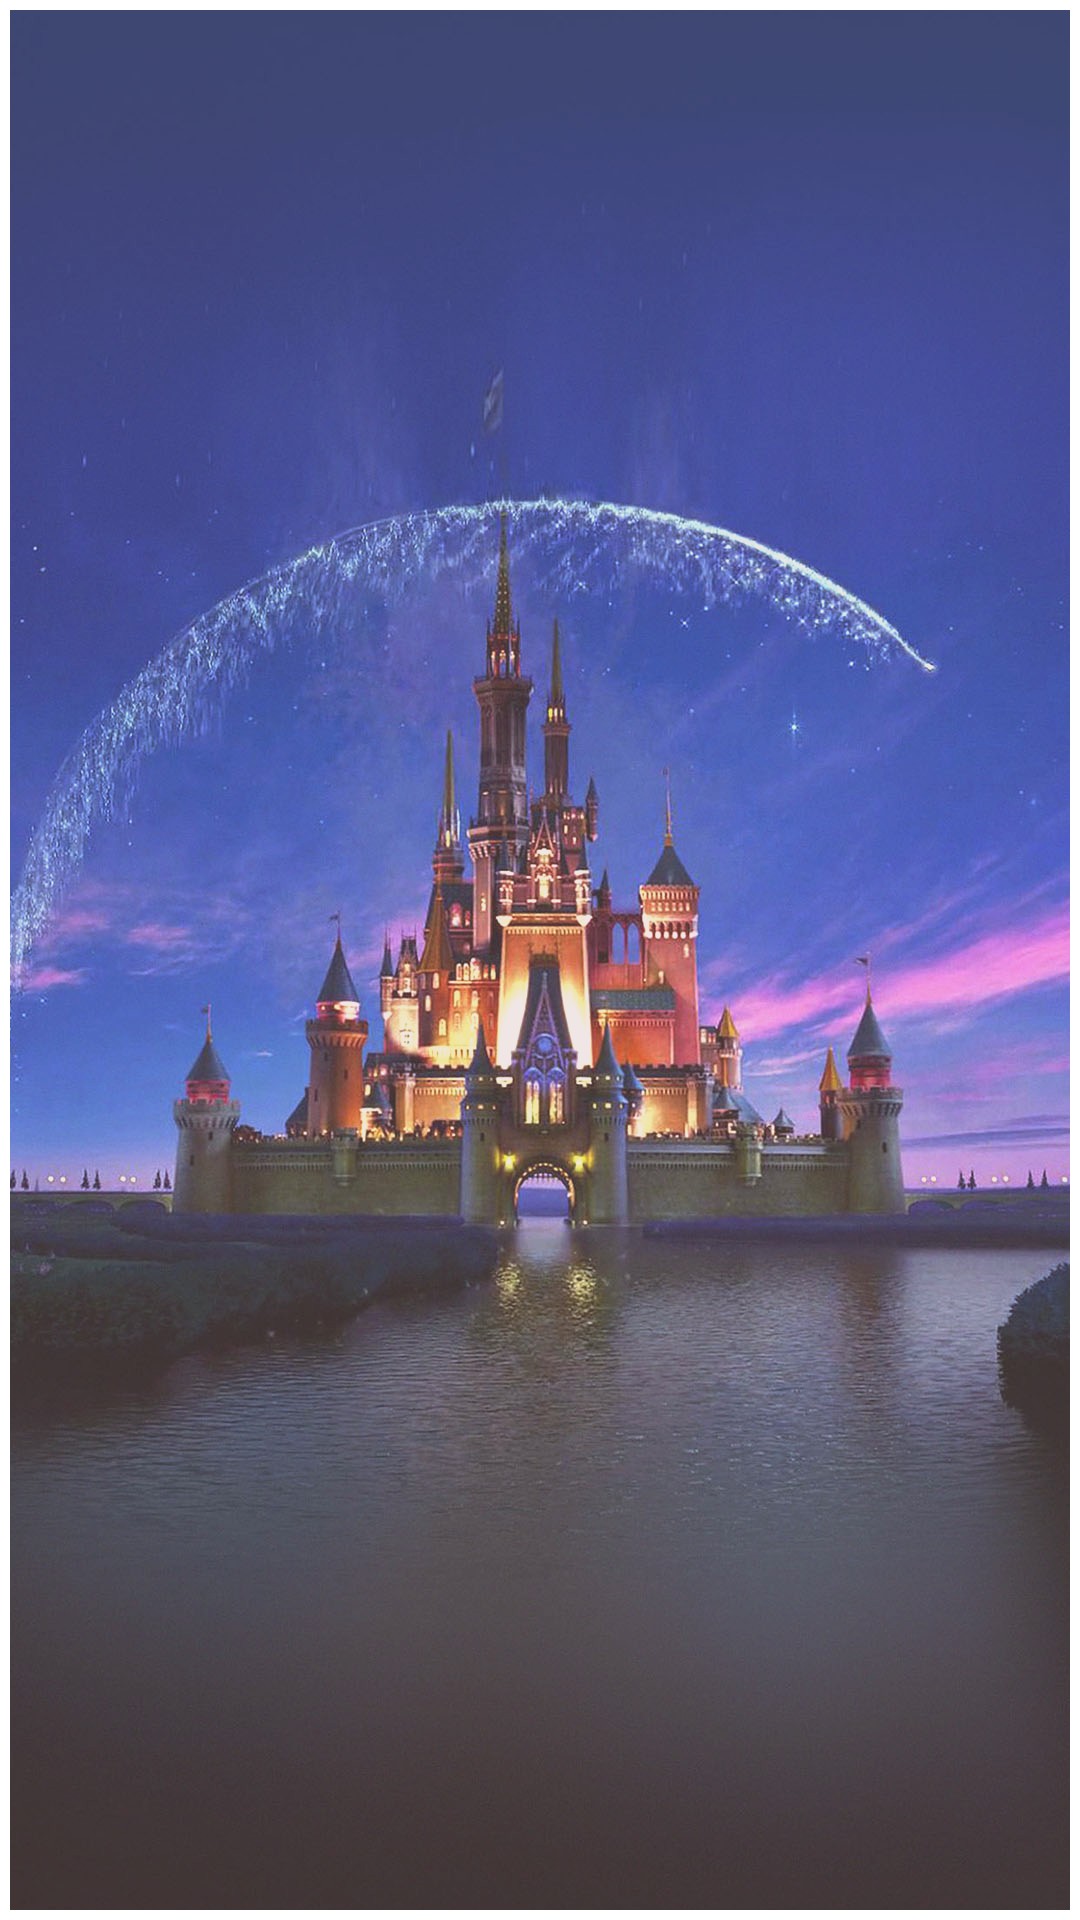 Iphone Wallpaper Disney Castle